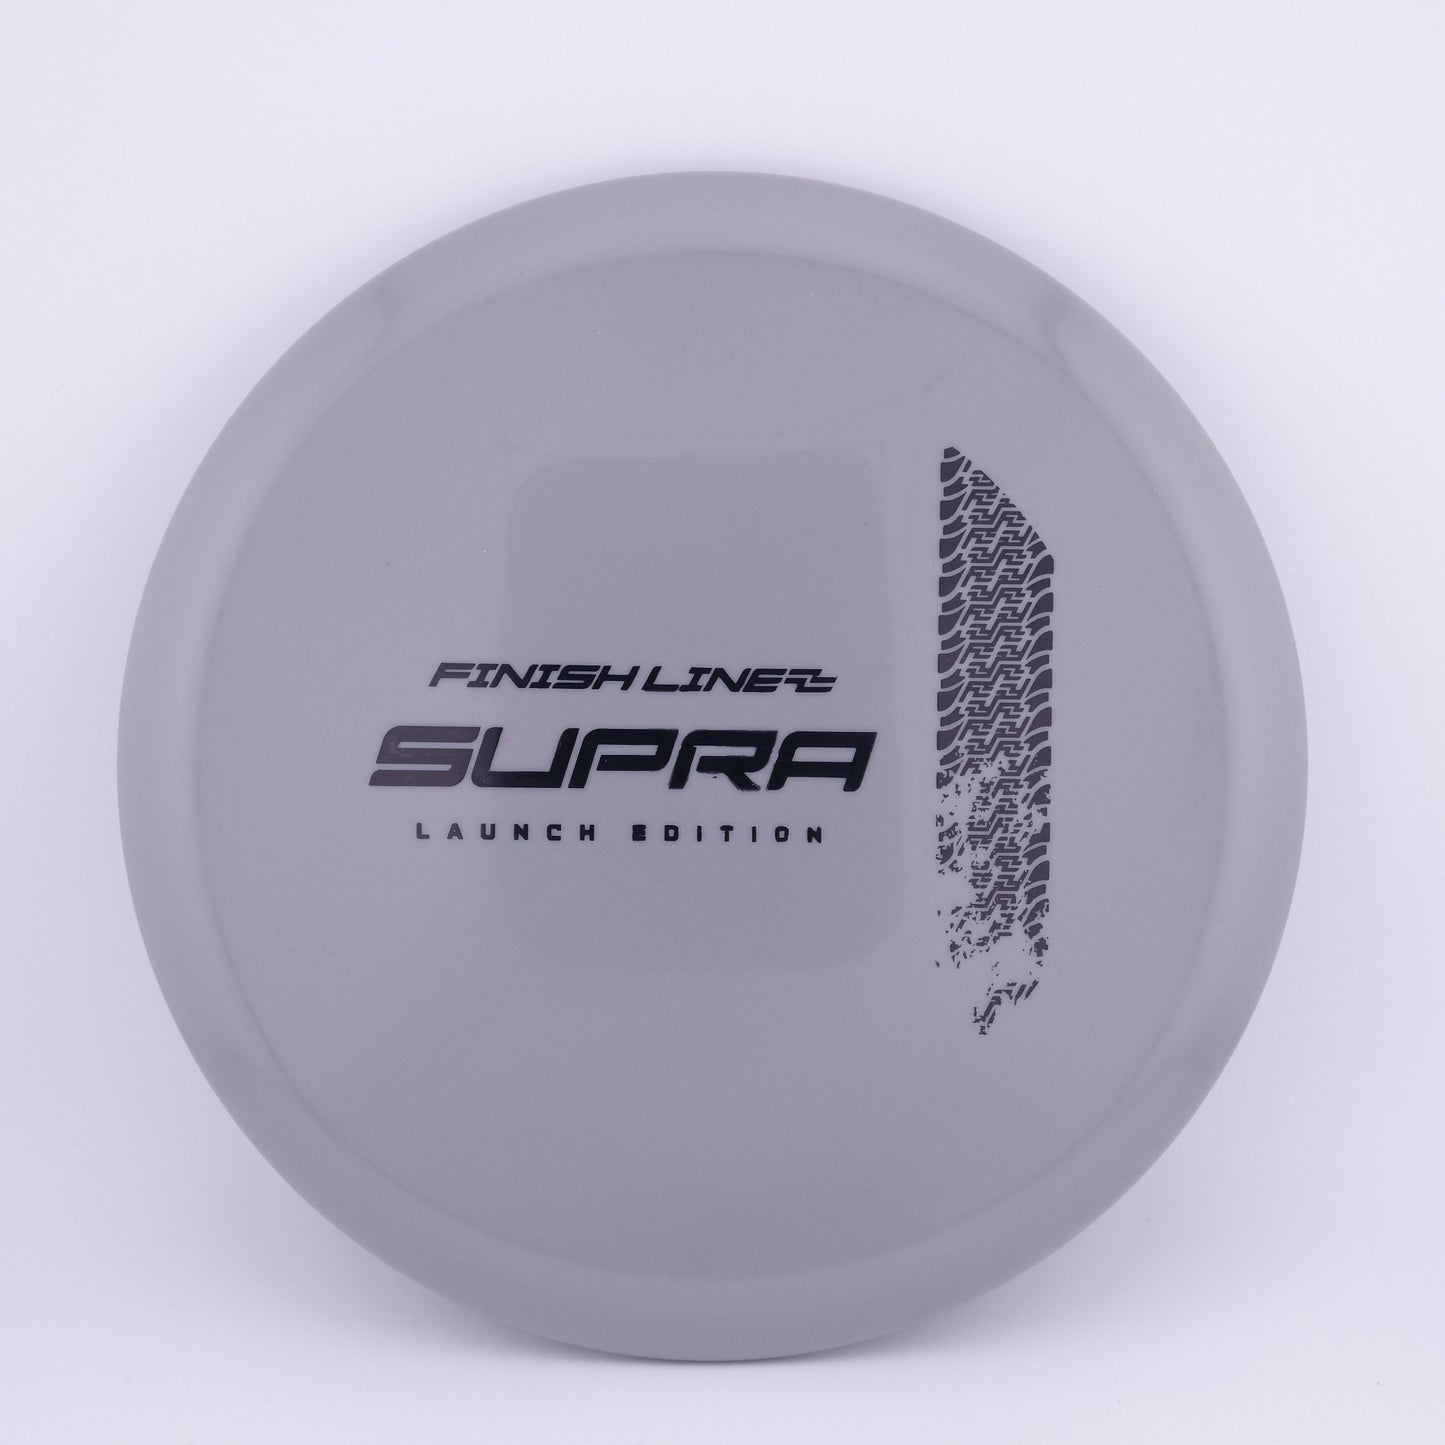 Forged Supra 177g+